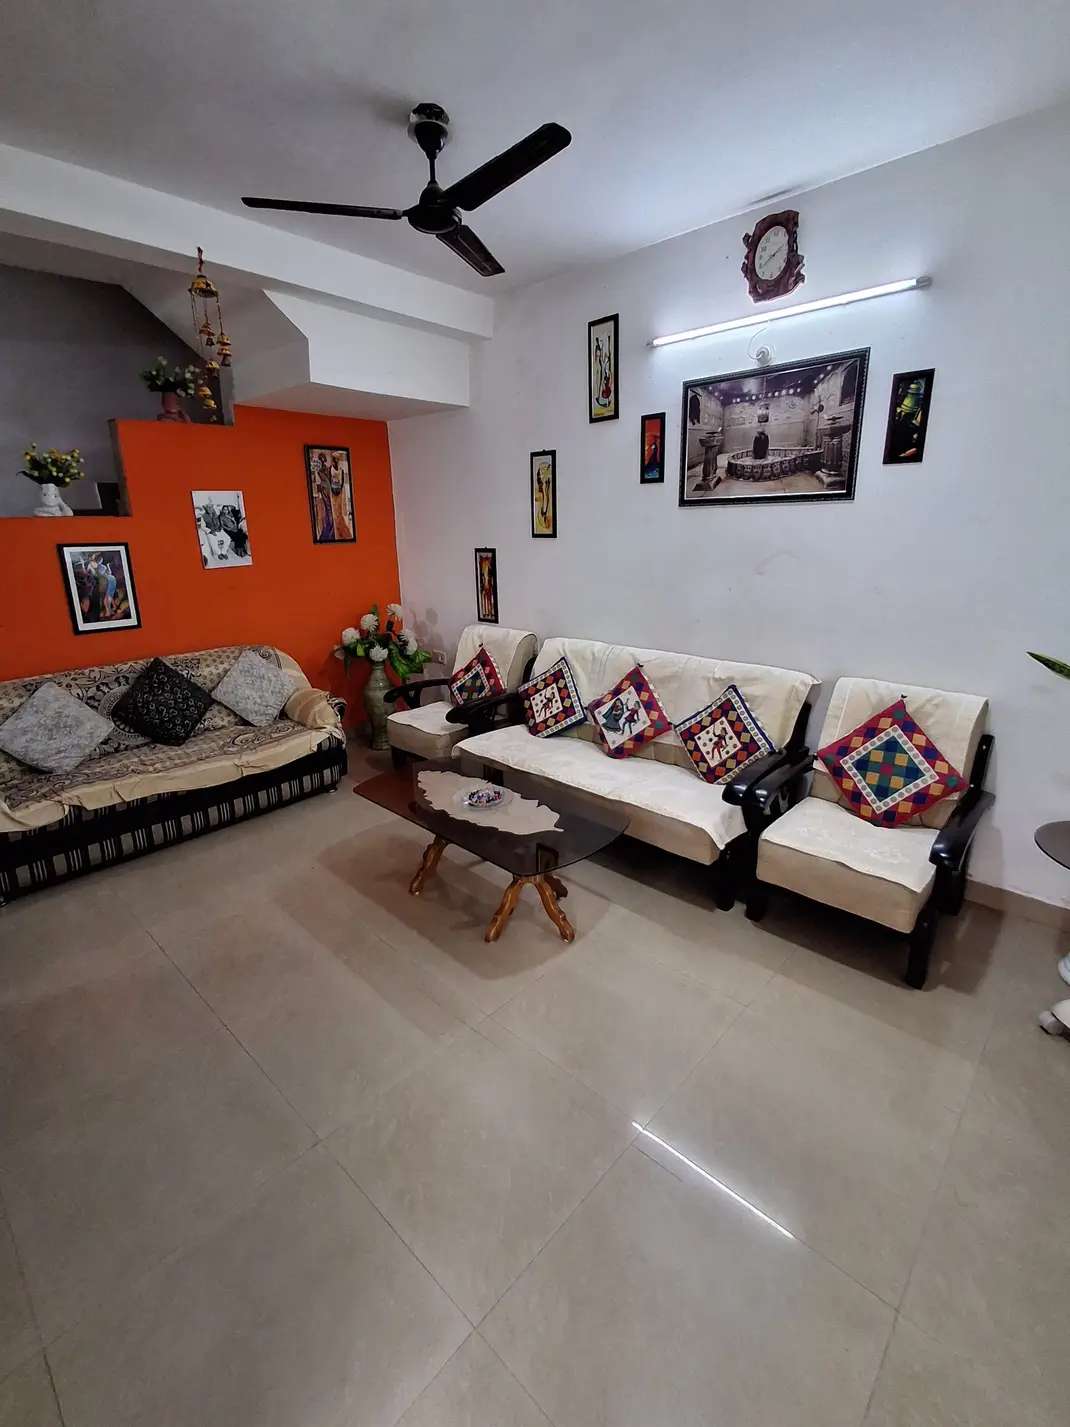 4 Bed/ 0 Bath Sell House/ Bungalow/ Villa; 1,100 sq. ft. lot for sale @Ag classic Kolar road near ci park view bhopal